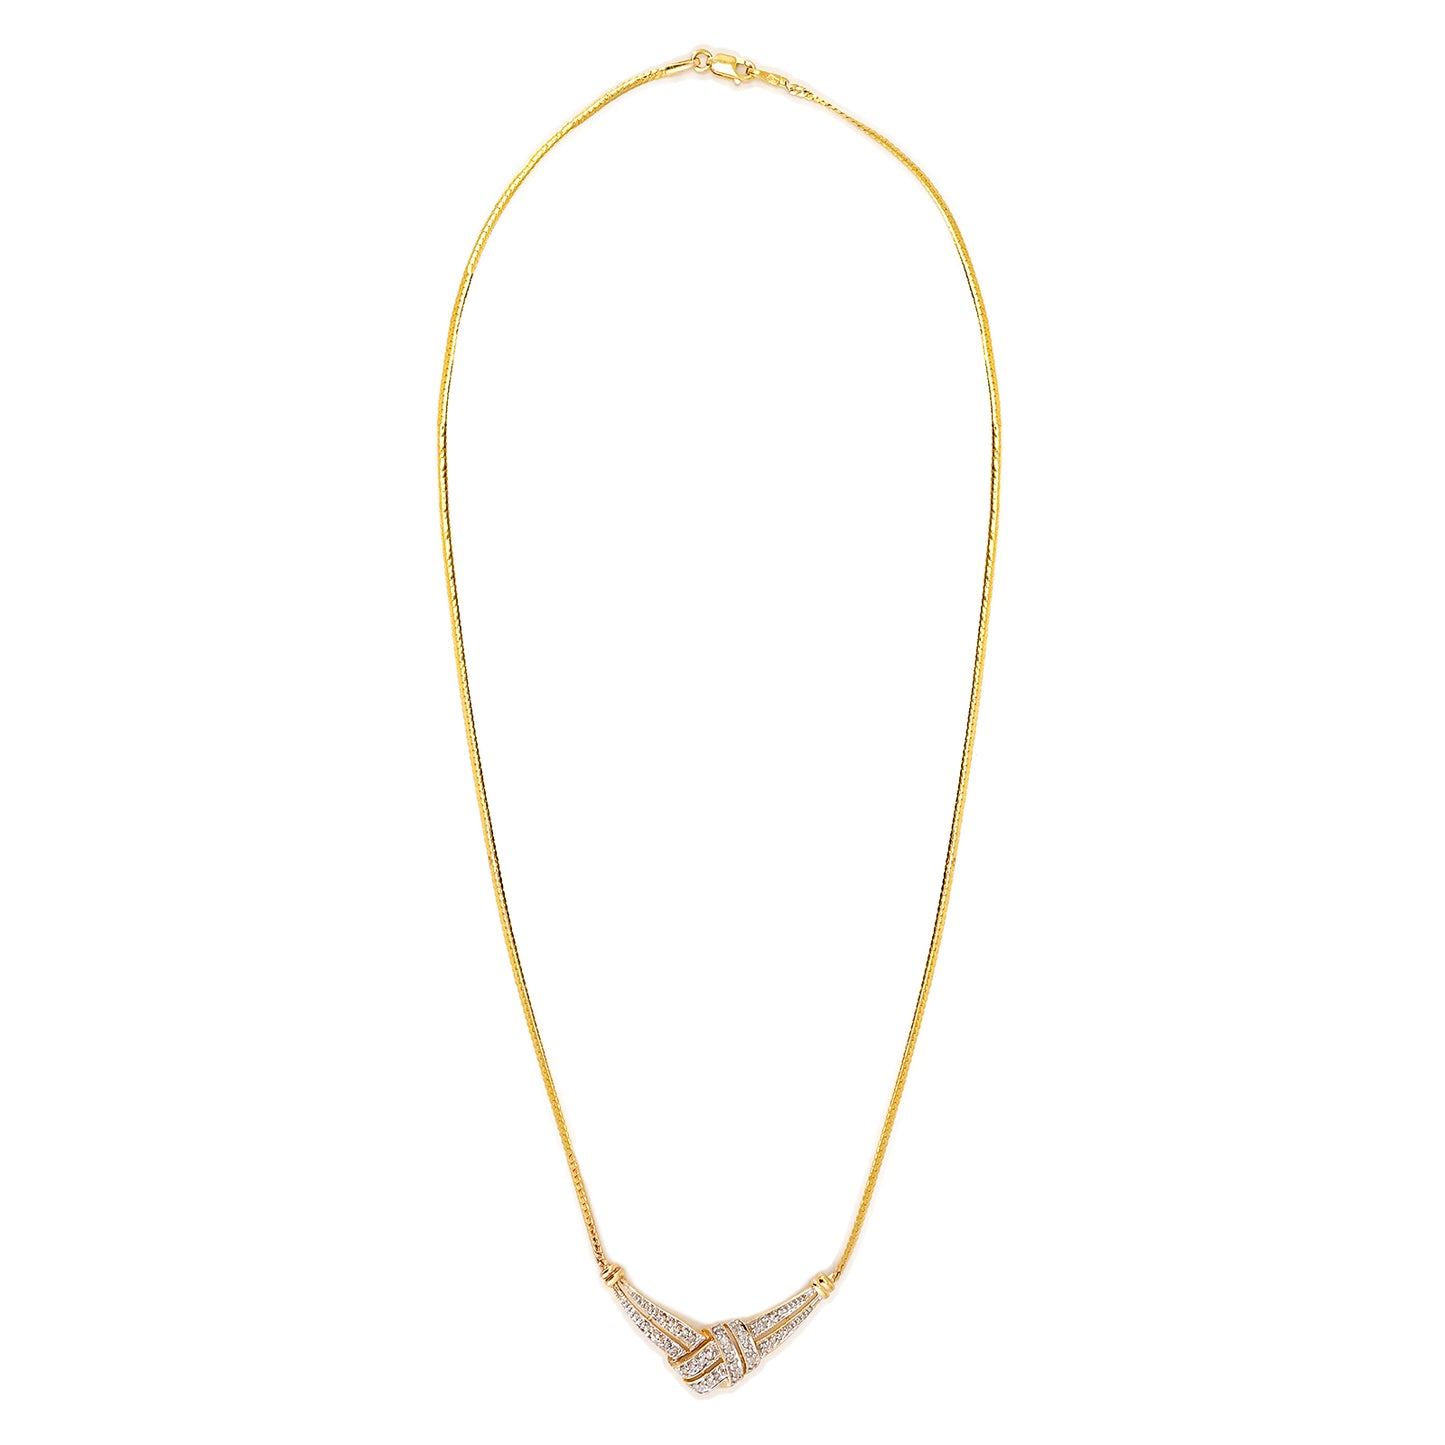 Diamond necklace yellow gold 585 gold 14K women's jewelry gold chain diamond necklace